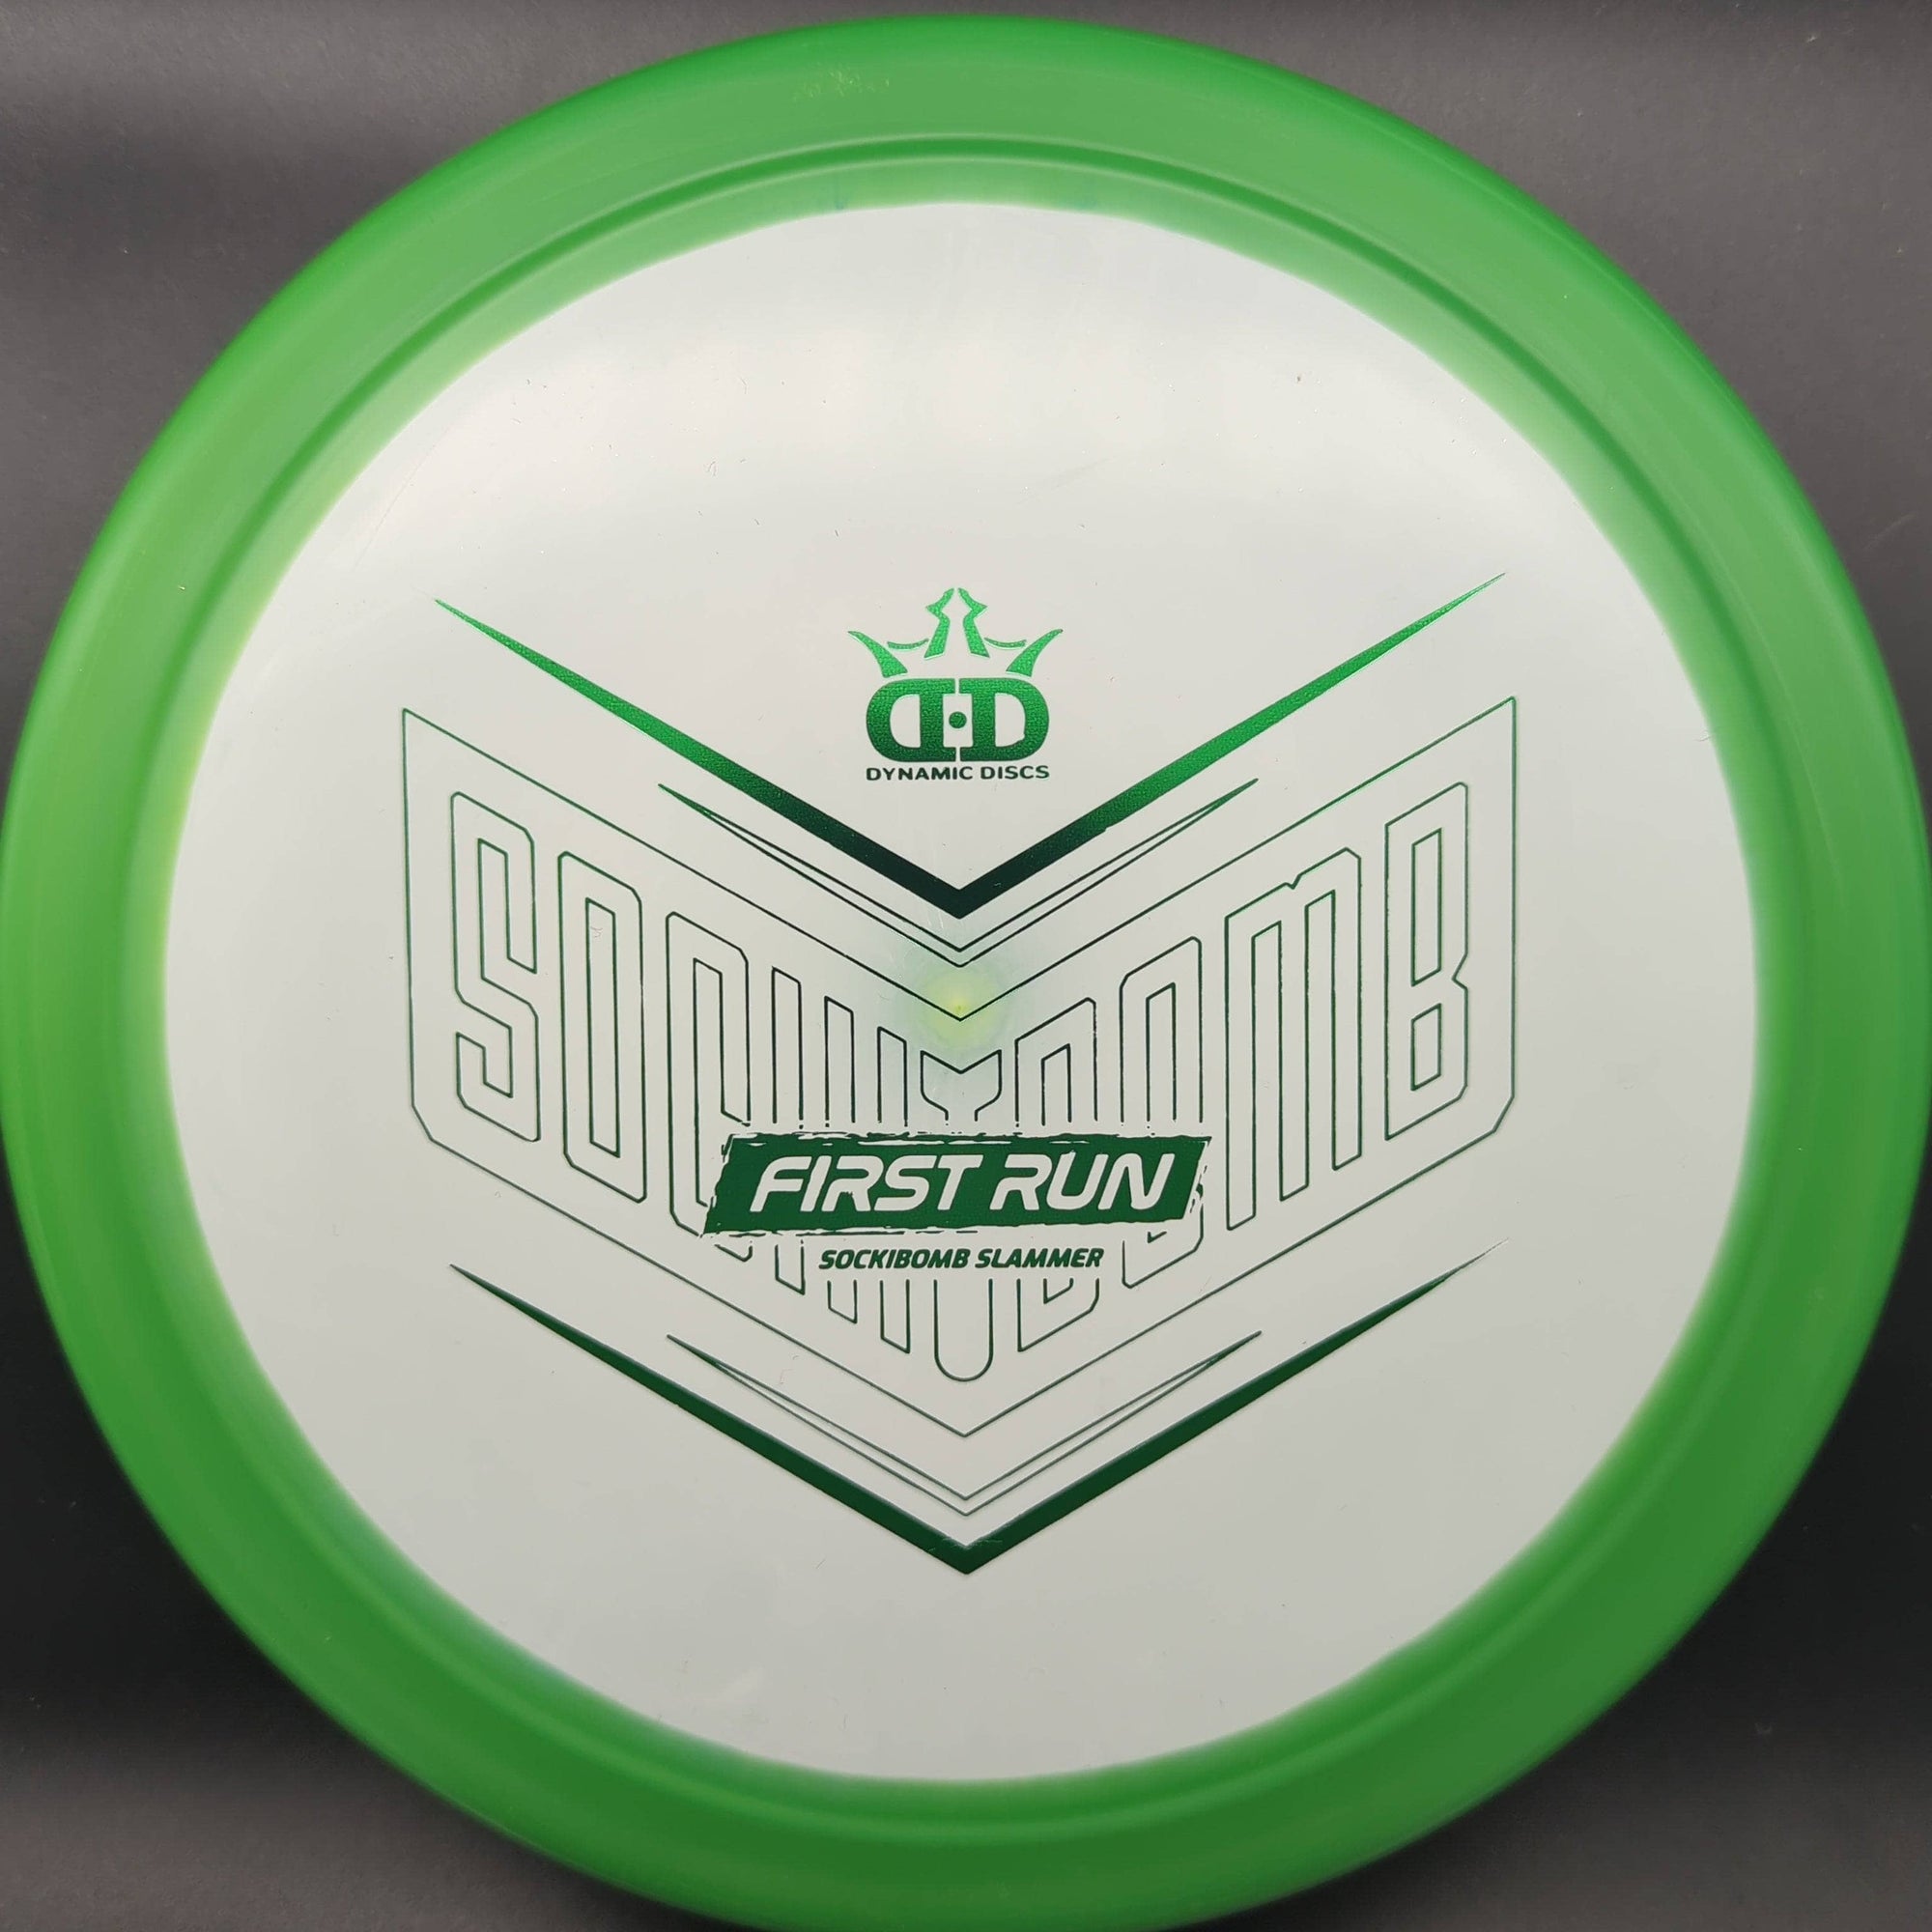 Dynamic Discs Putter Green Green Stamp 174g Slammer, Classic Supreme Orbit Sockibomb, First Run